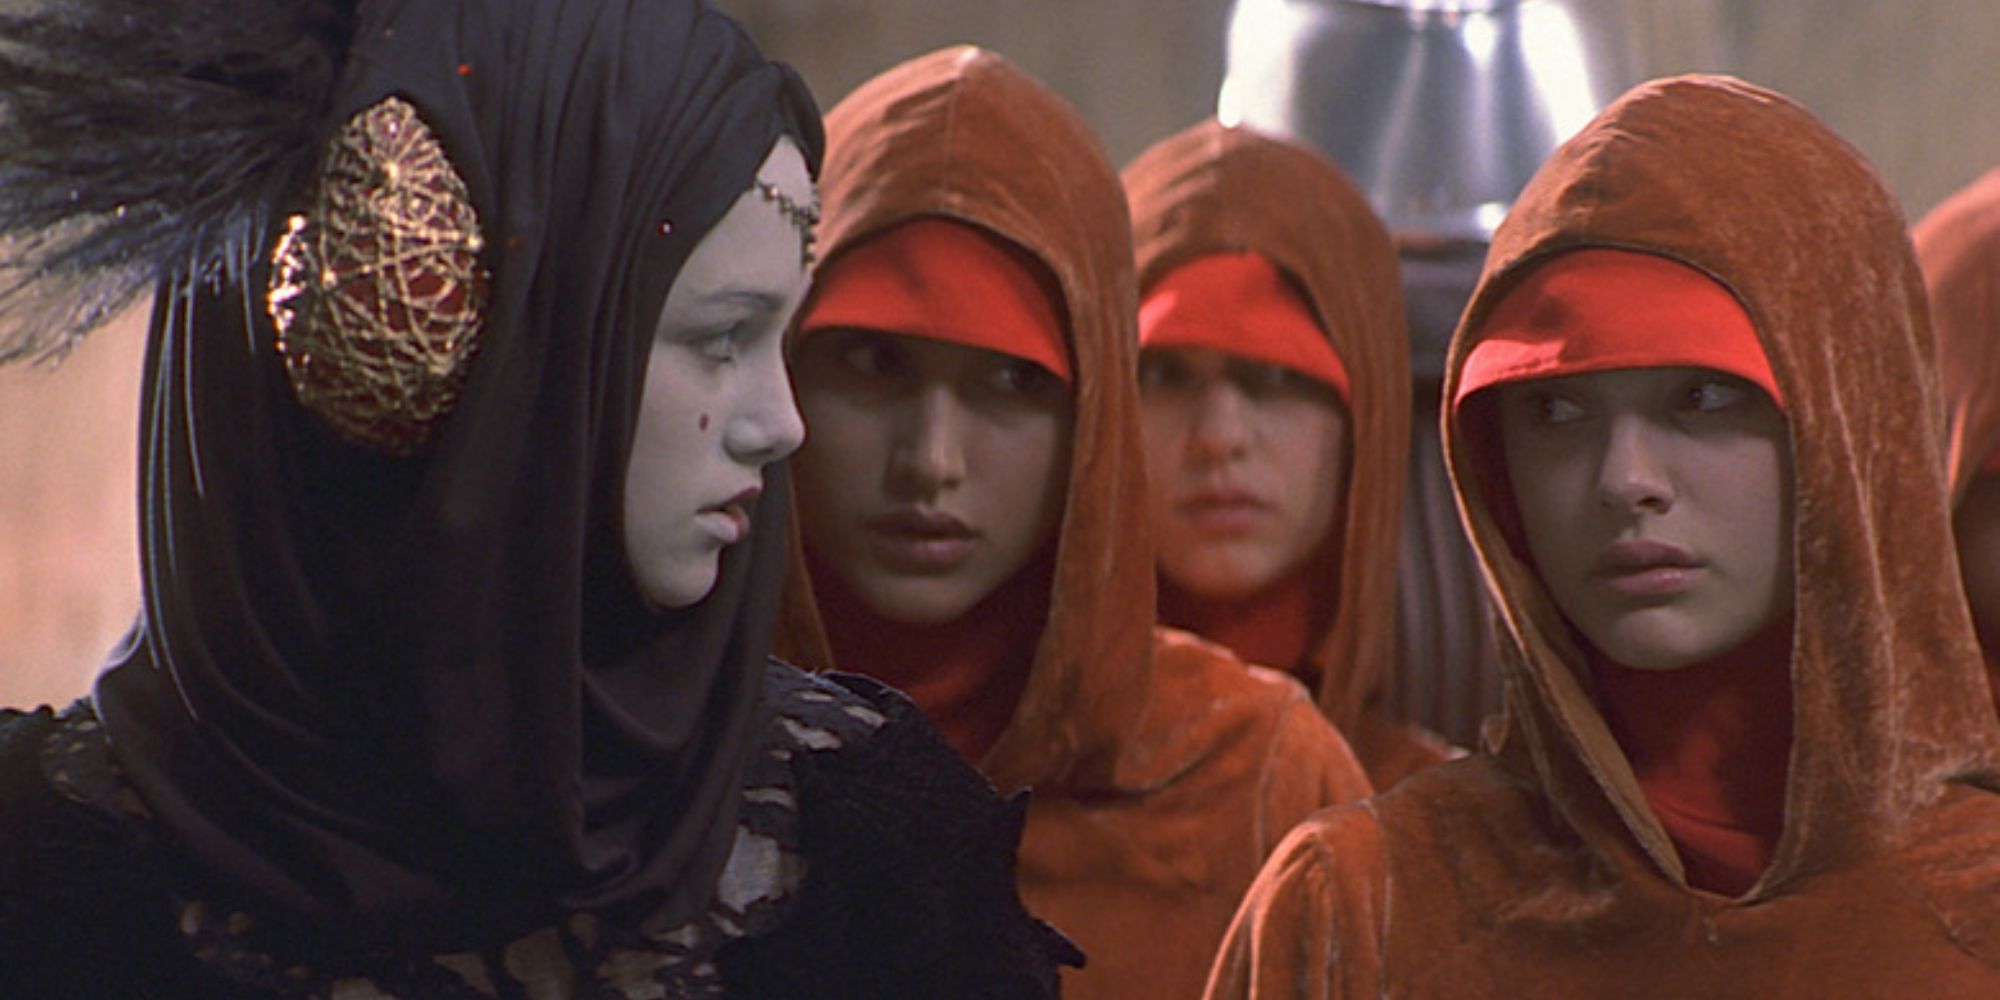 Sofia Coppola cameo in The Phantom Menace